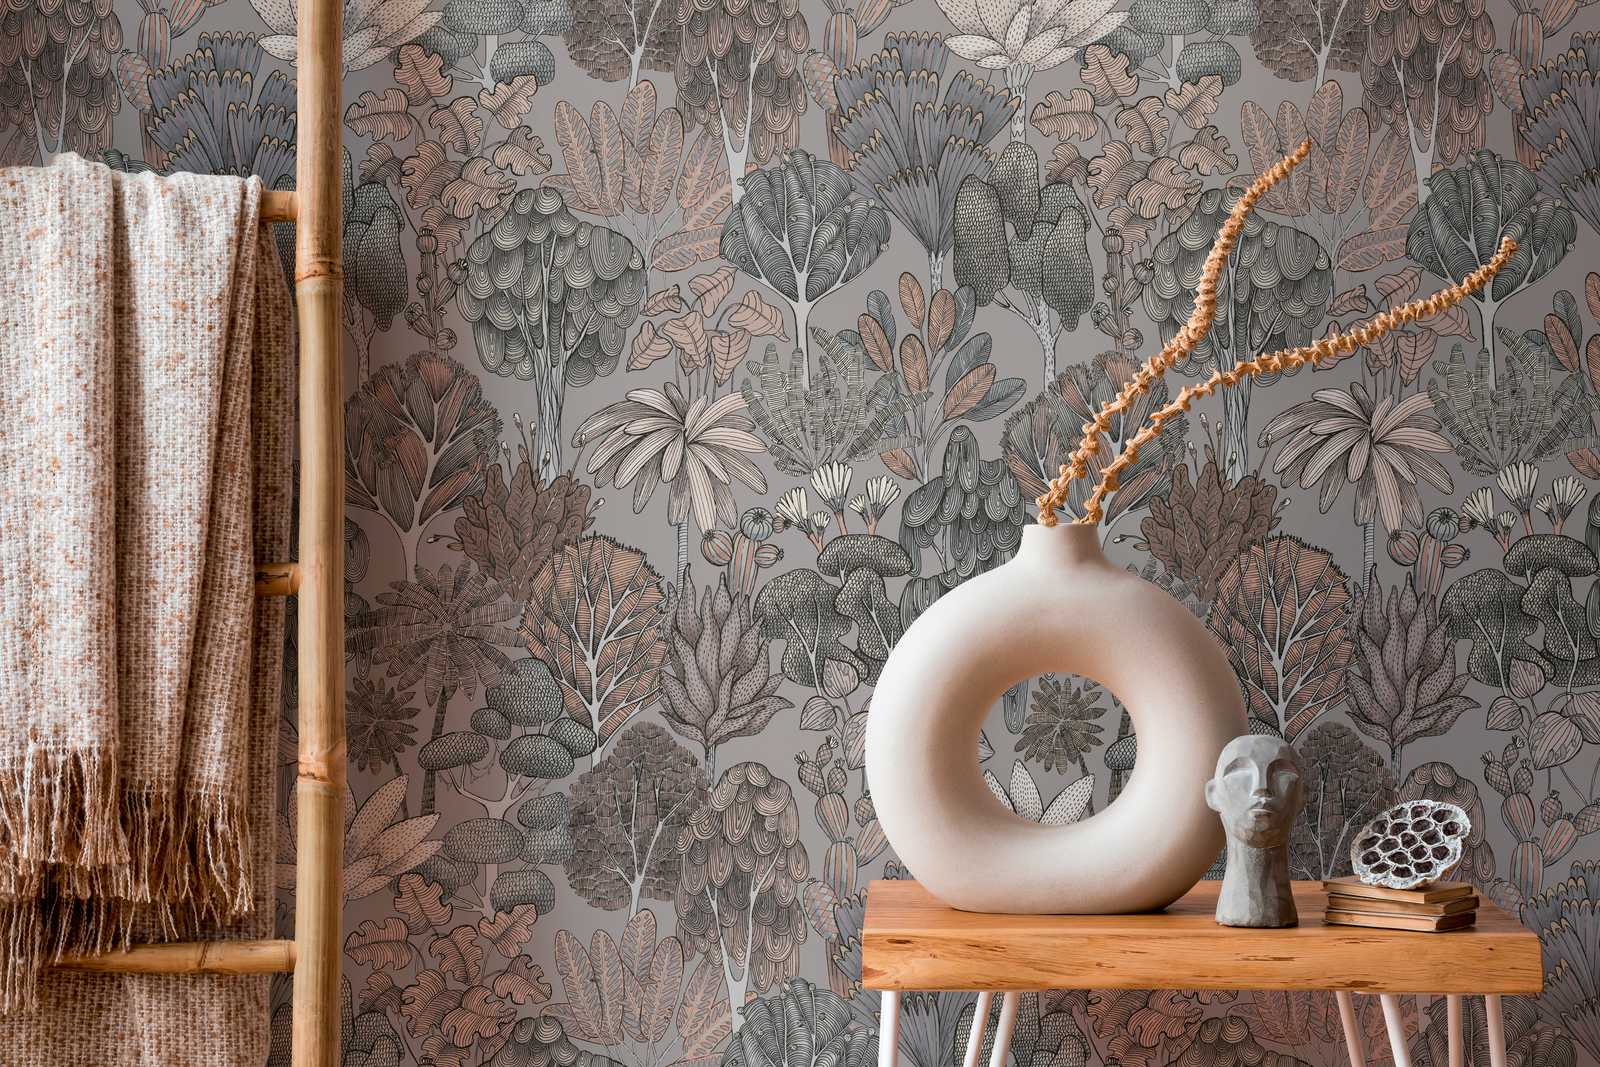             Wallpaper grey beige with floral pattern in doodle look - grey, beige, orange
        